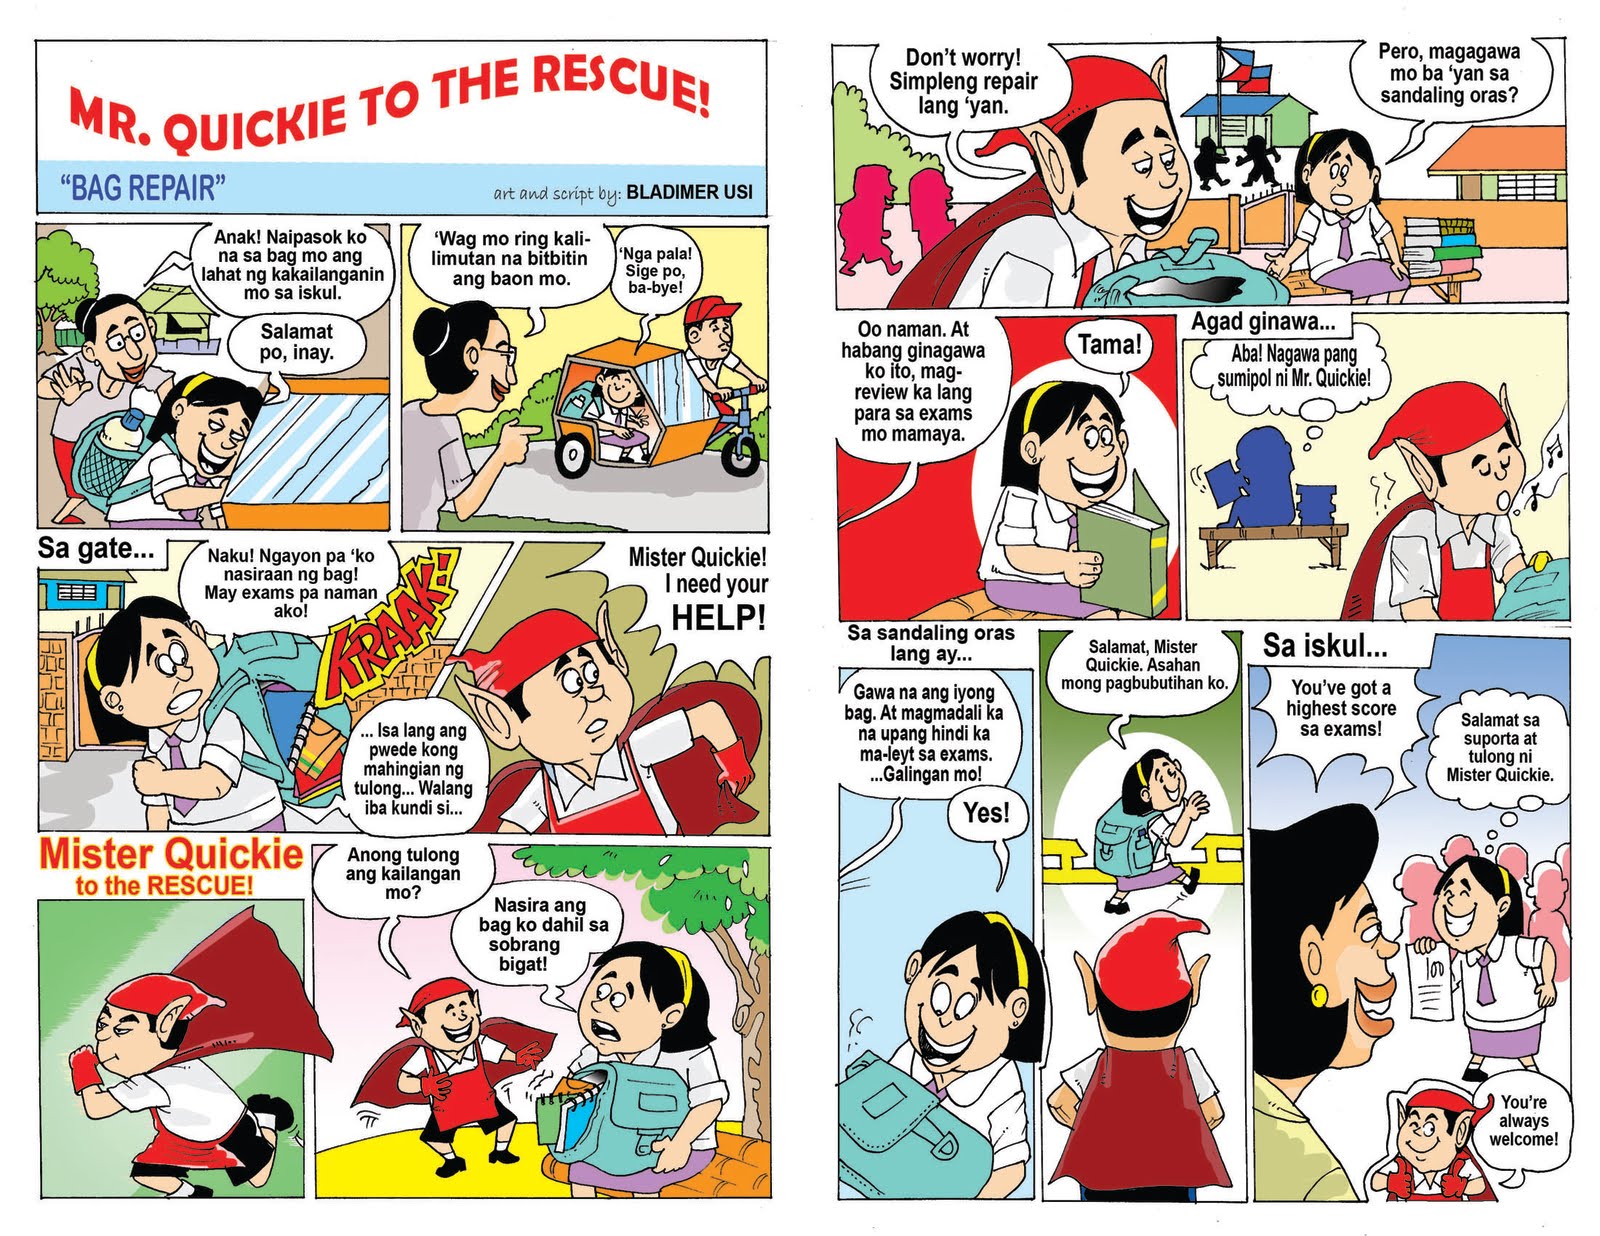 my cartoons and comicstrip: mister quickie komiks story 2 ni bladimer usi